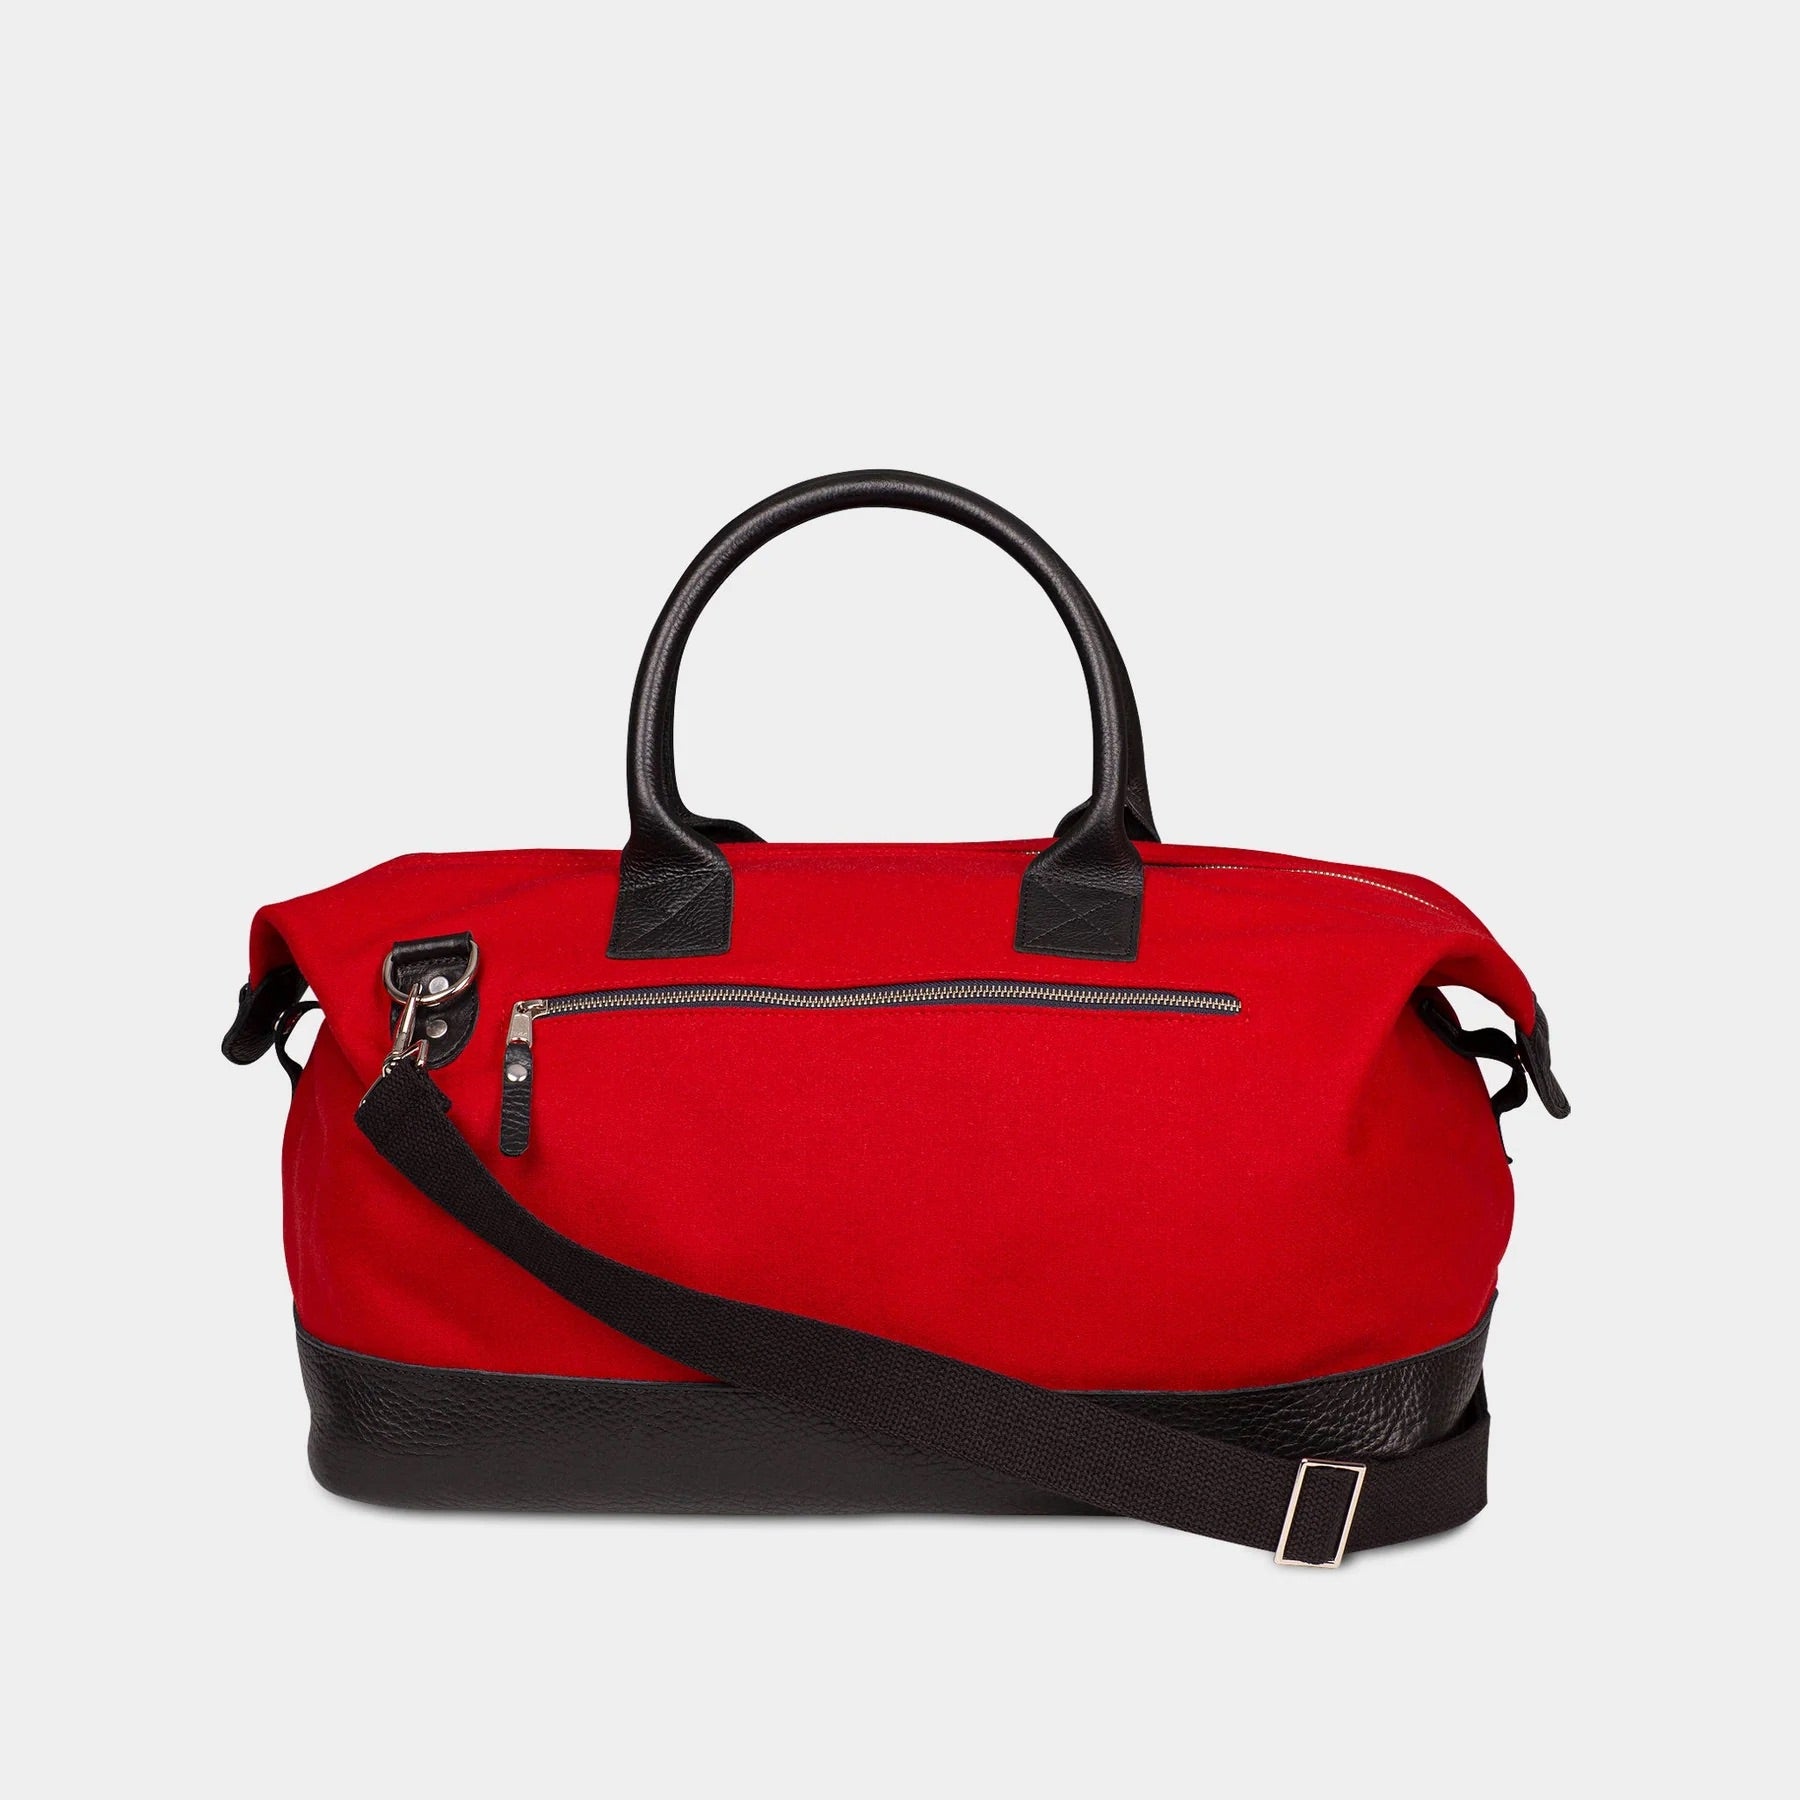 UGA "Bulldog" Weekender Duffle Bag in Red